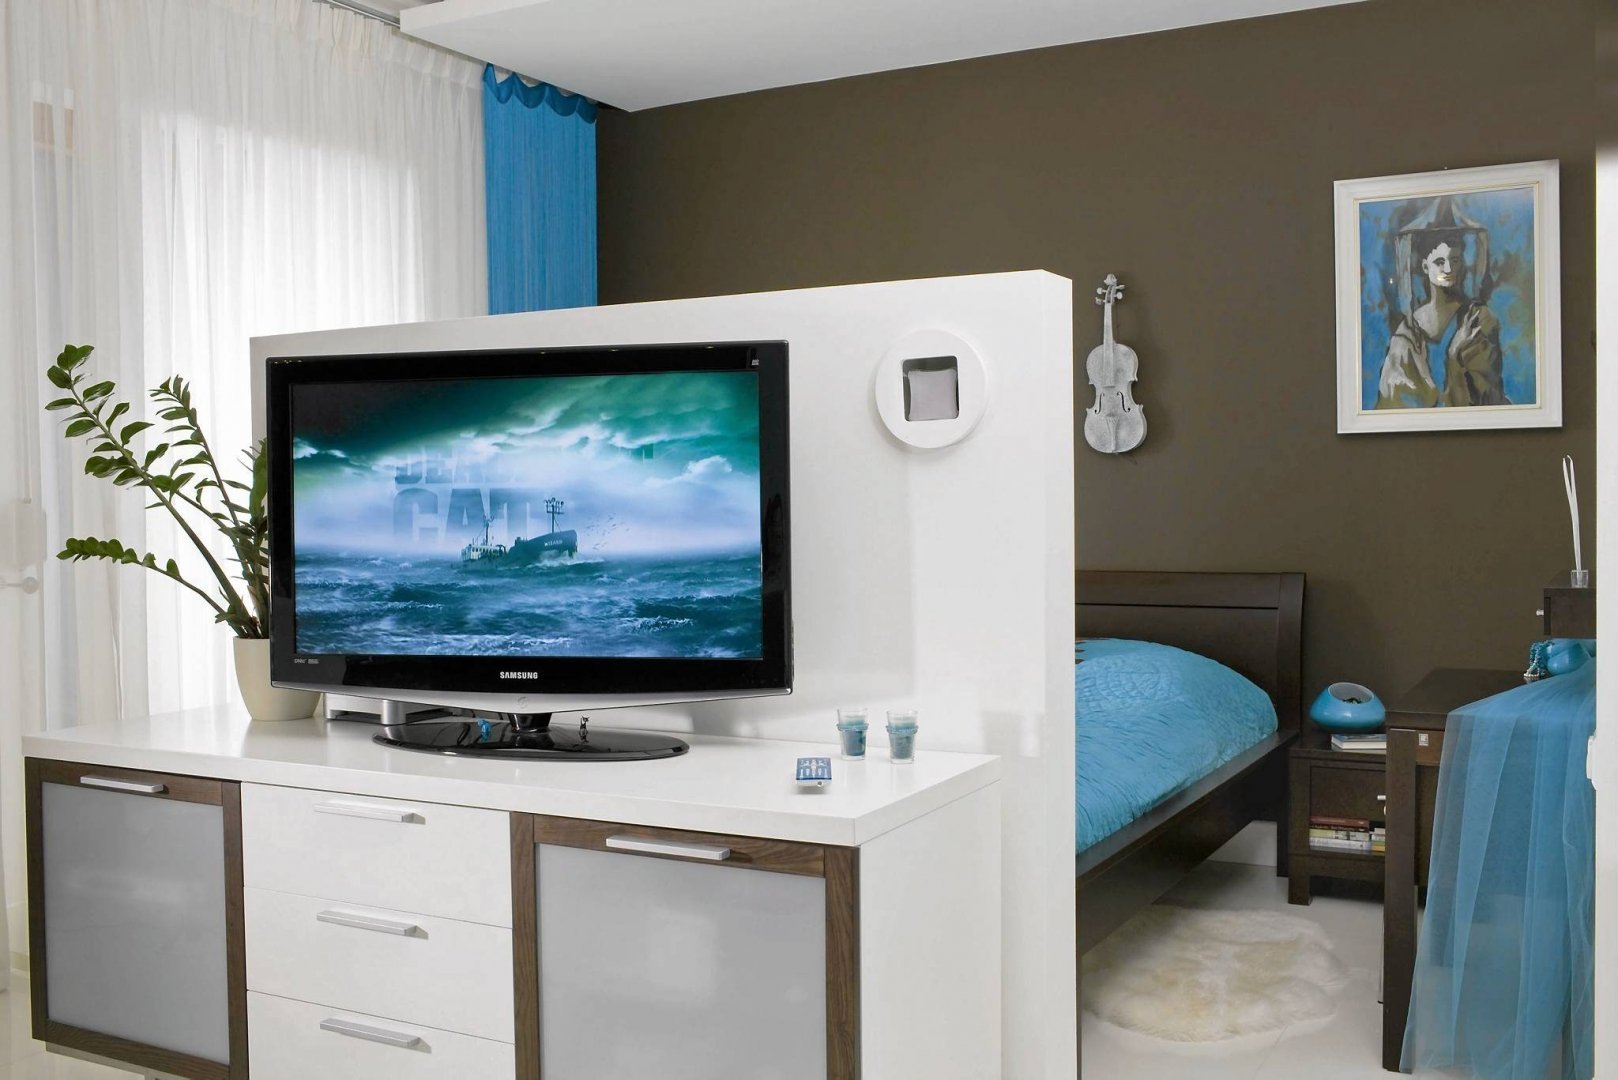 Телевизор в комнате 2. Телевизор в спальне. Телевизор в центре комнаты. Спальня с перегородкой для телевизора. Телевизор на тумбе посреди комнаты.